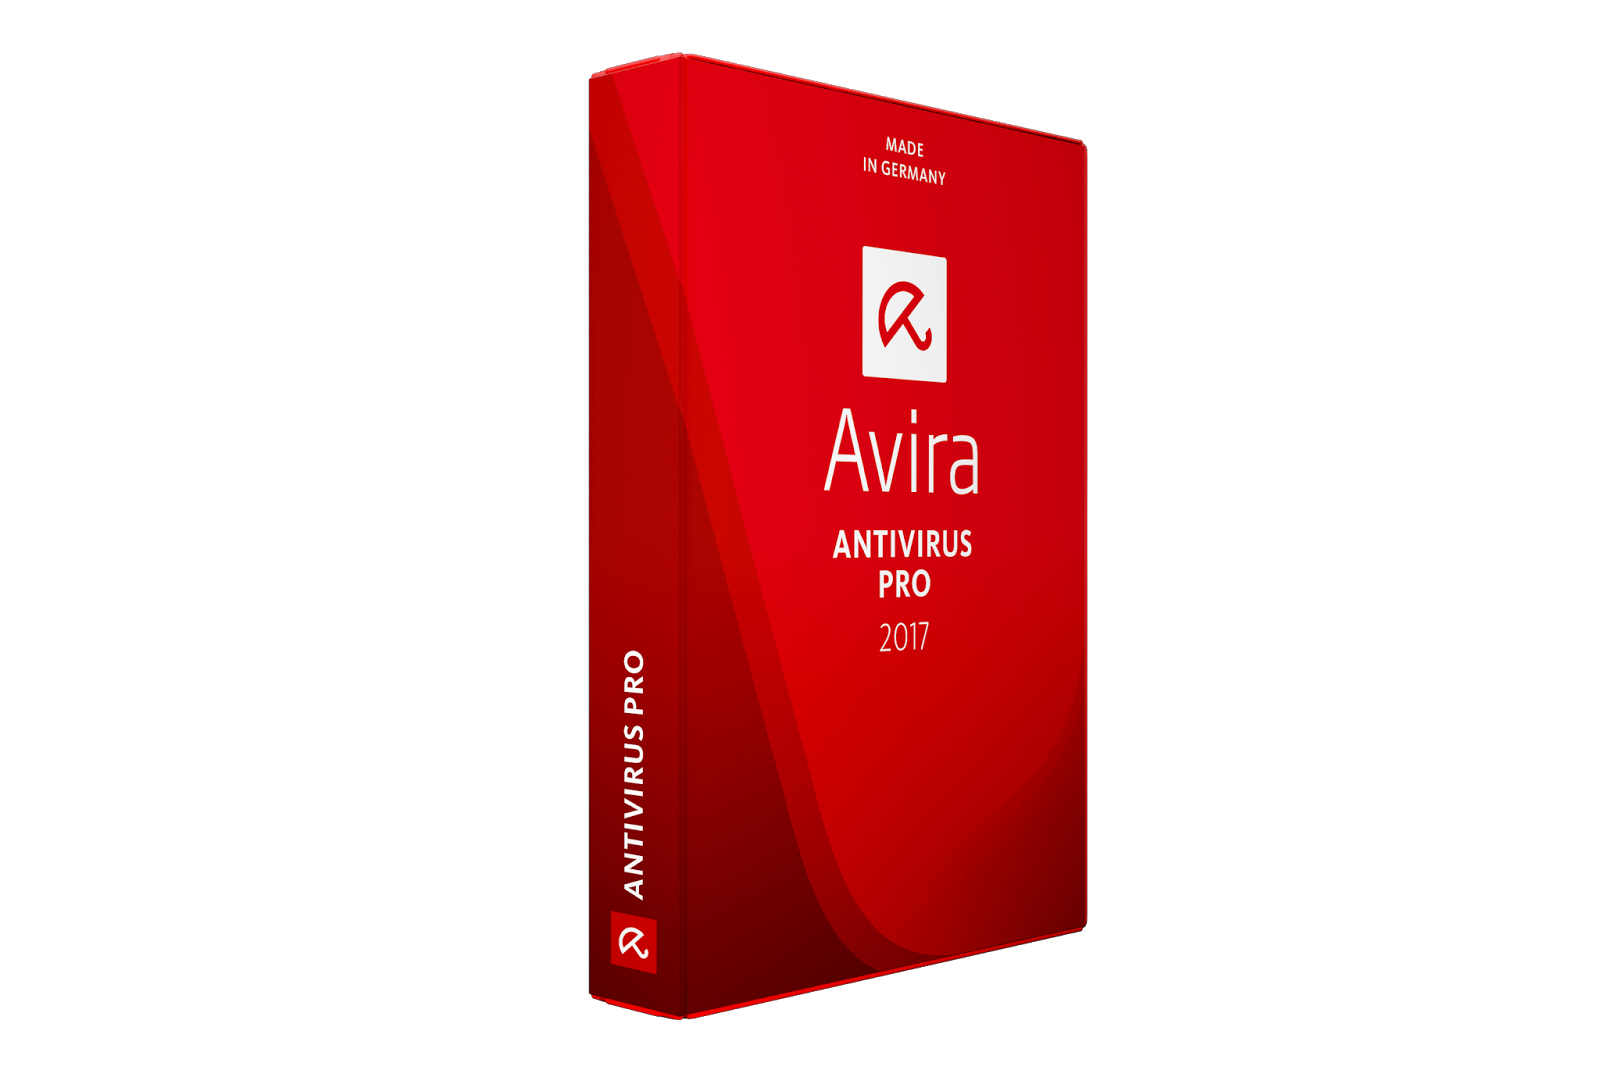 Avira Antivirus Pro 2.1.0.331 Free Download Full Version ~ Technical Waqas